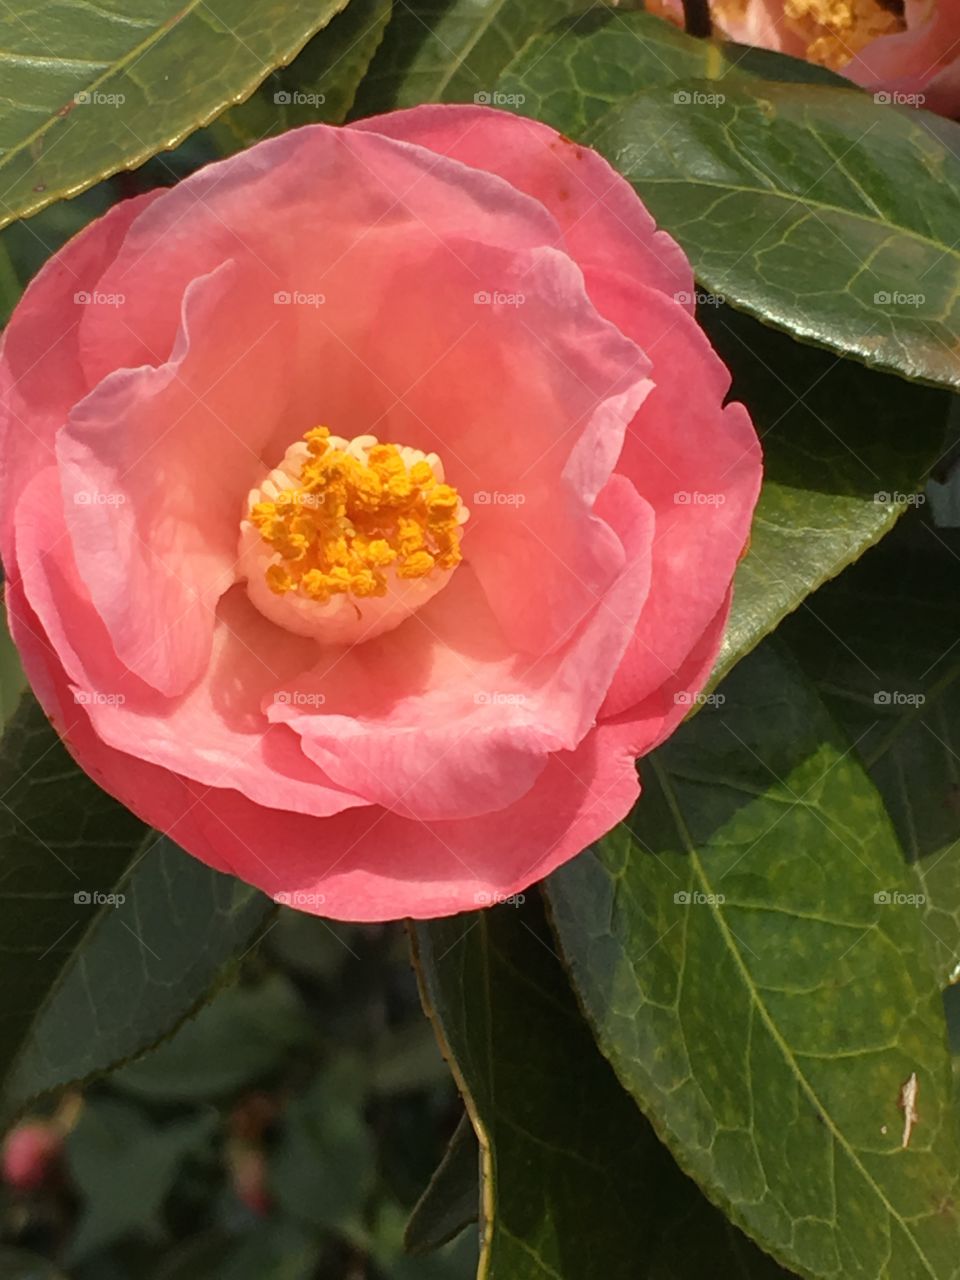 Snow camellia